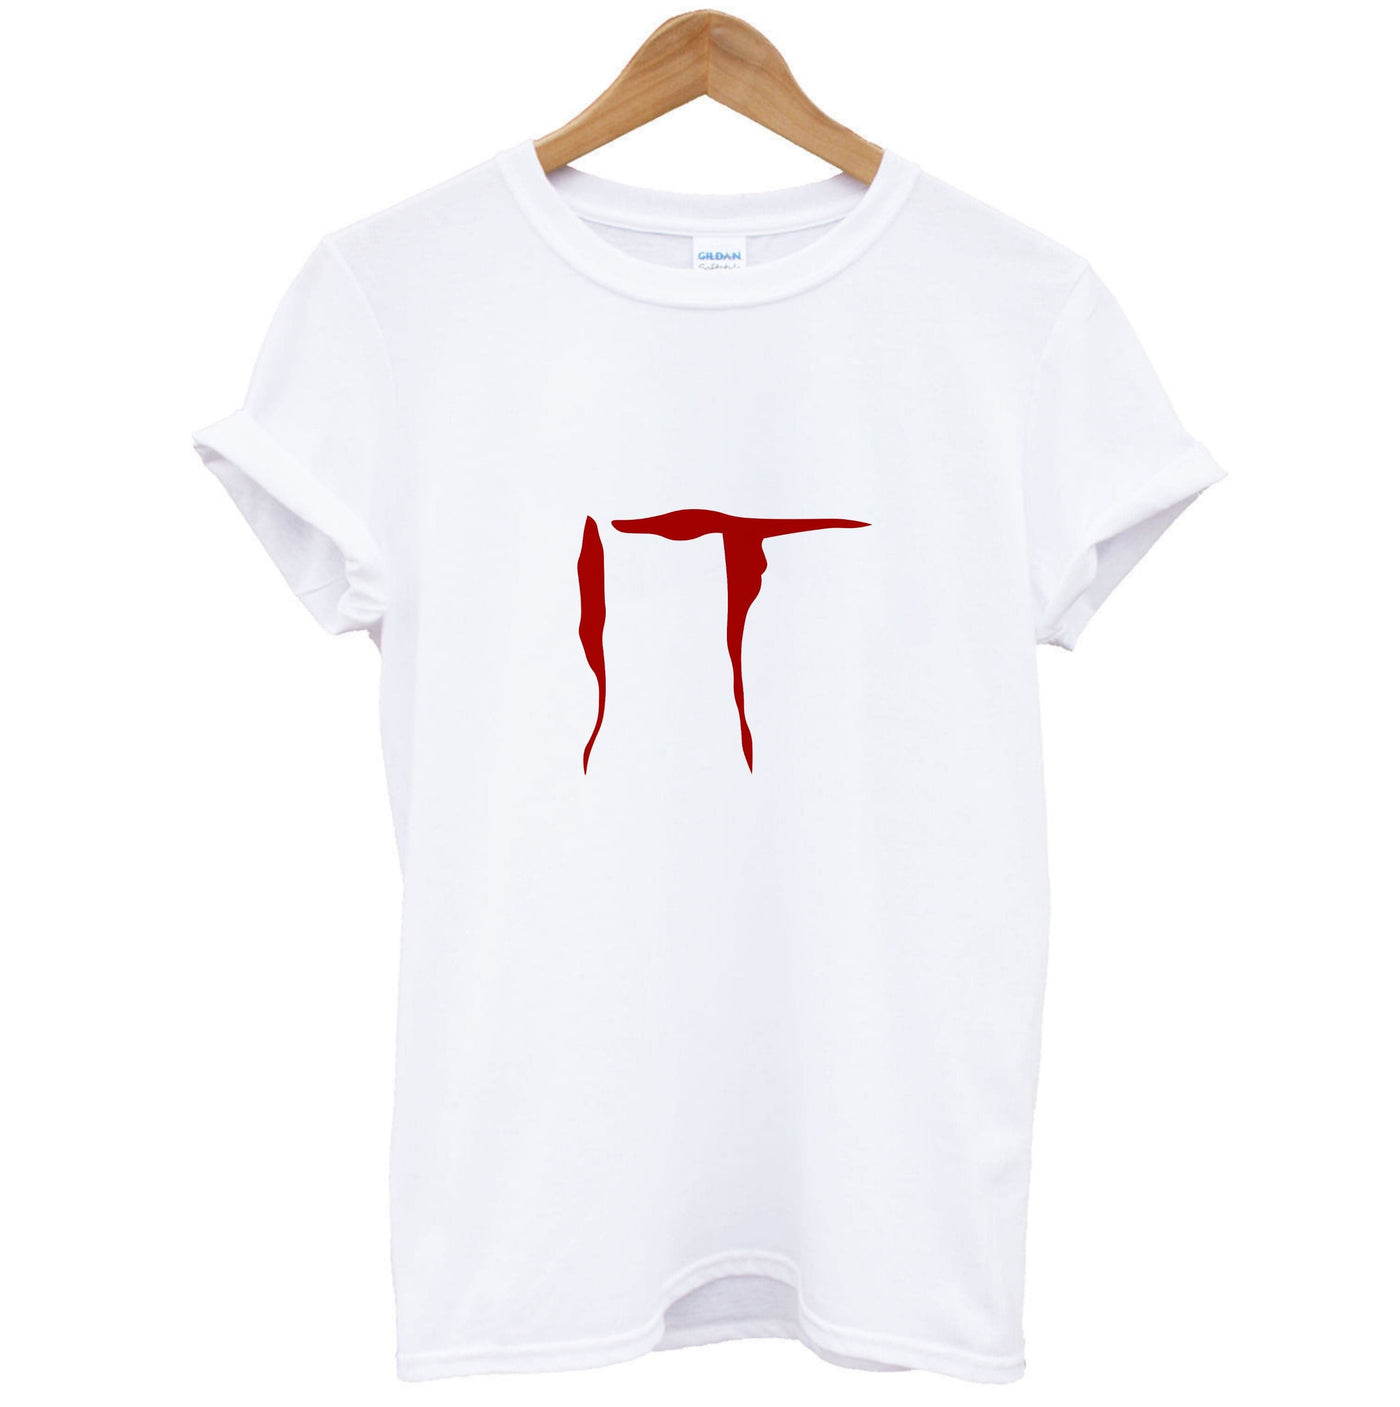 Text - IT T-Shirt